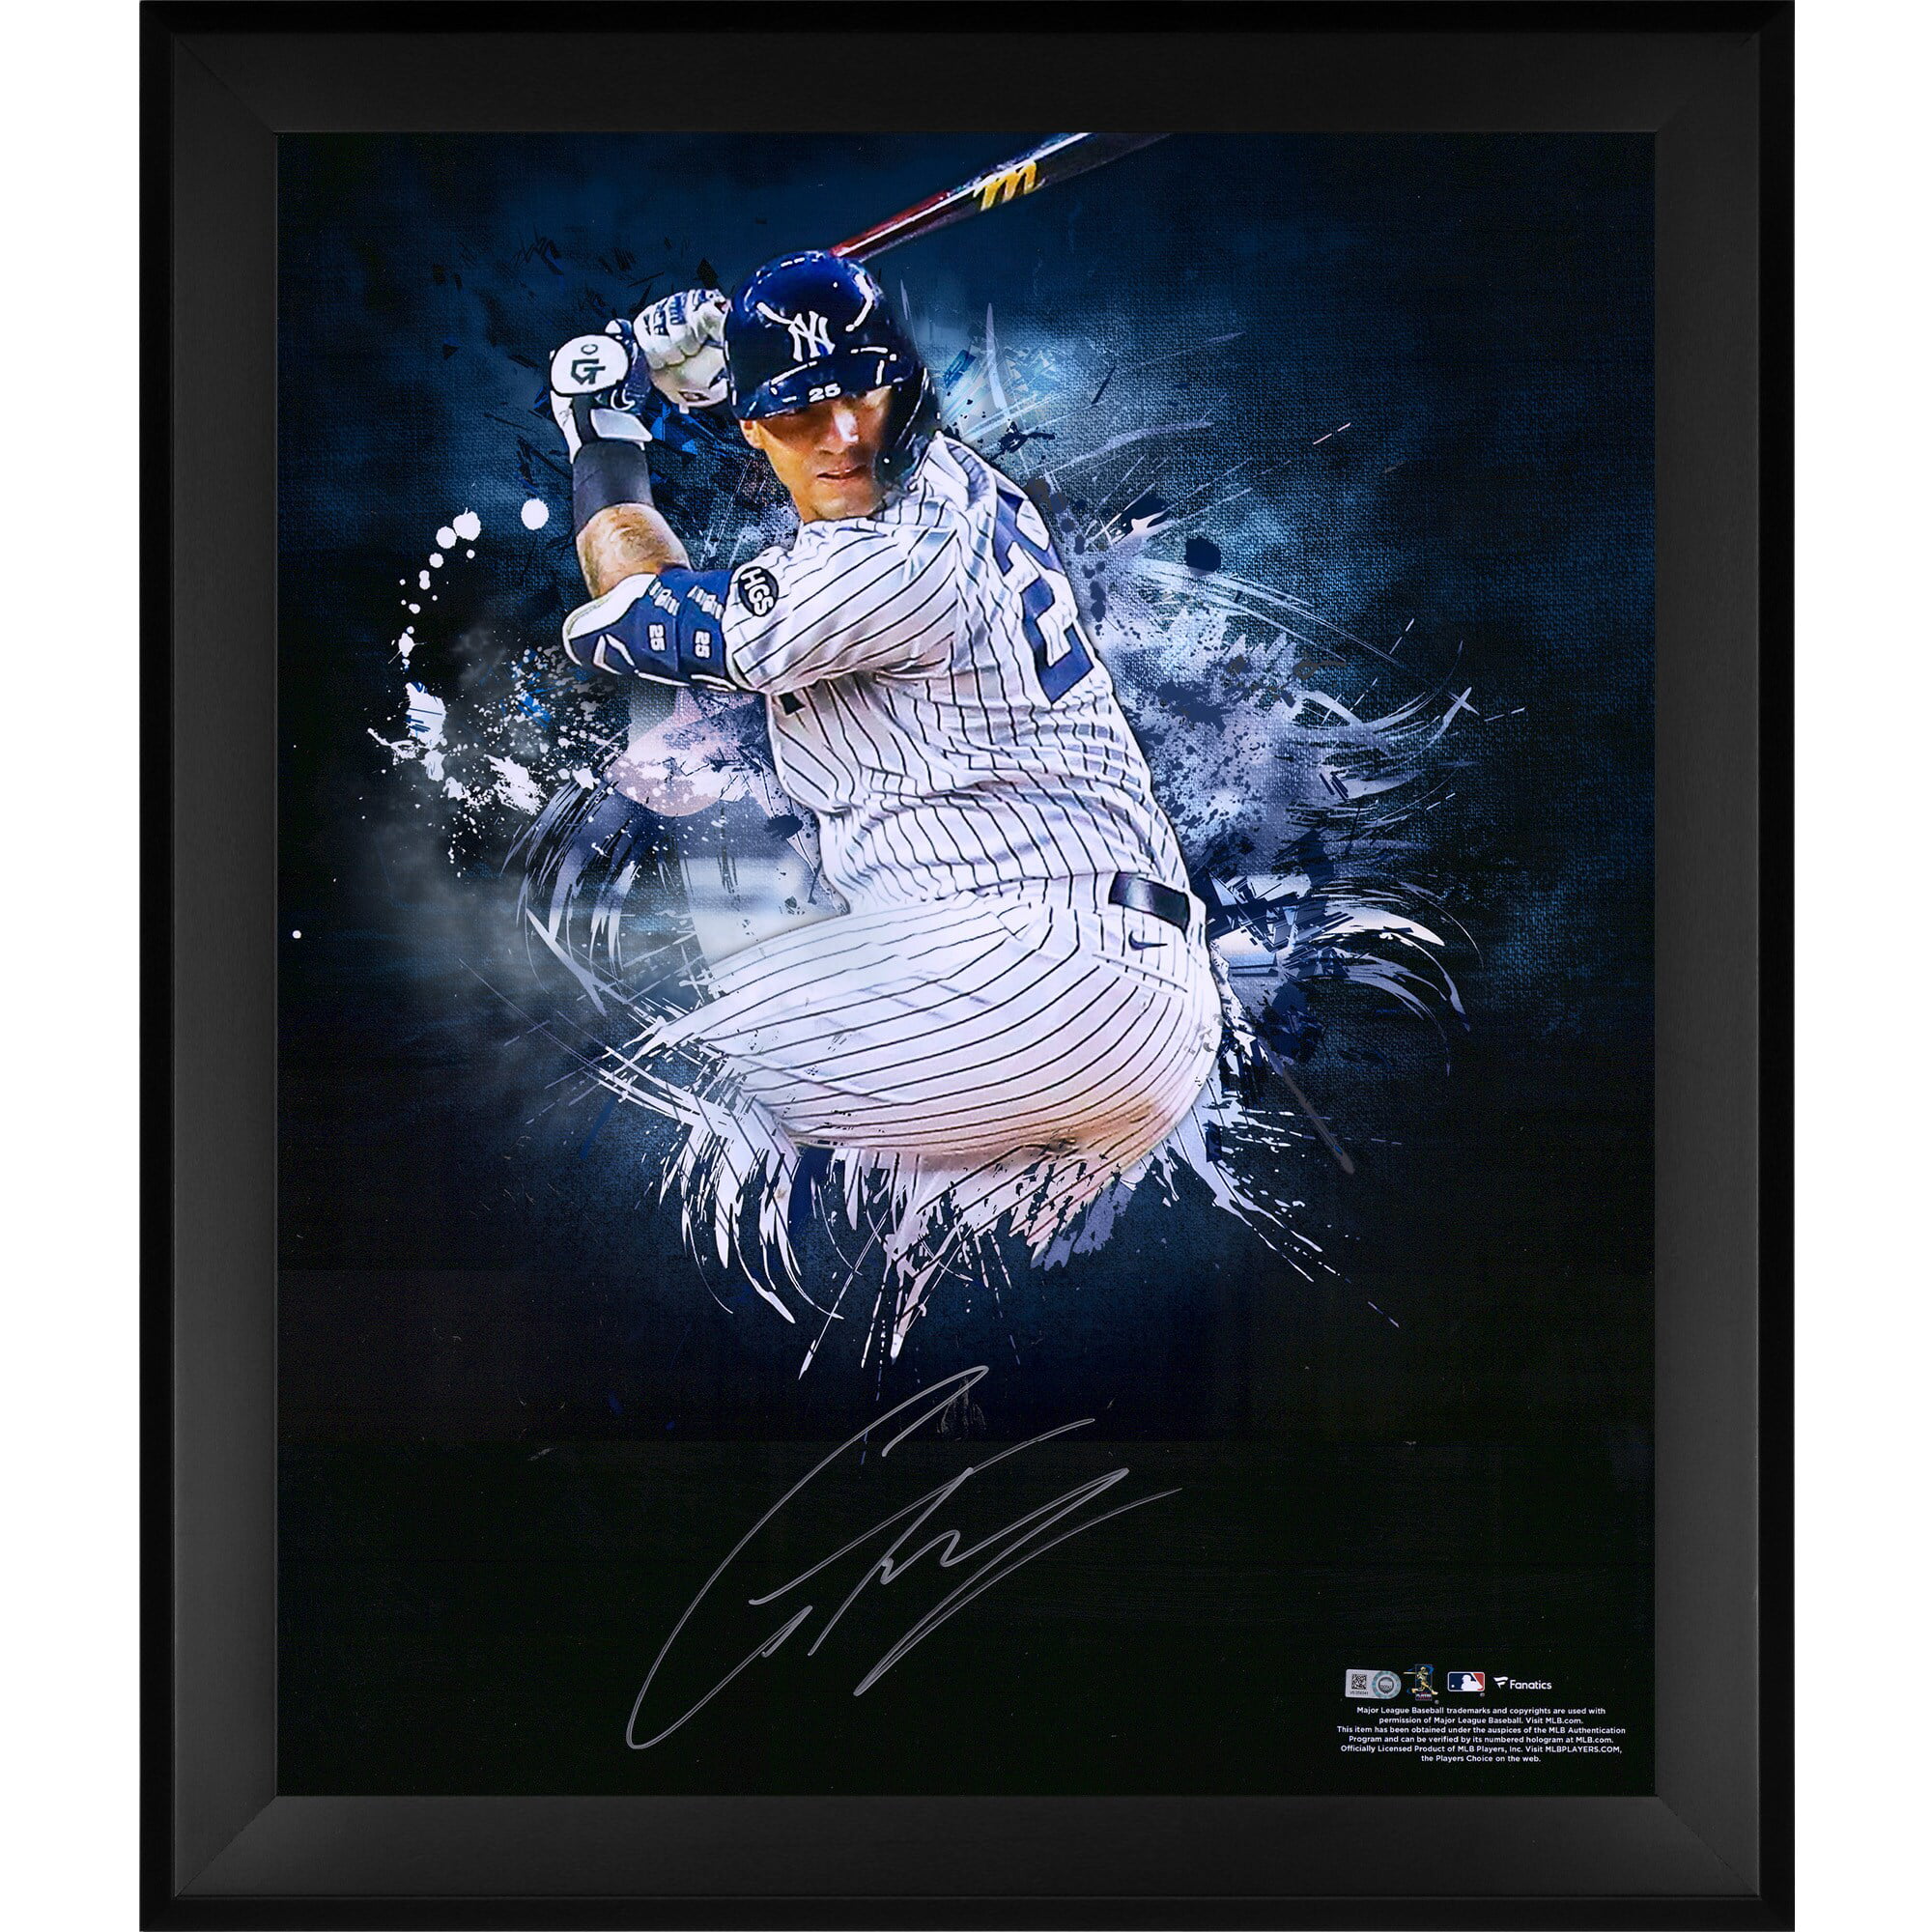 MLB Houston Astros - Jose Altuve 15 Wall Poster, 22.375 x 34